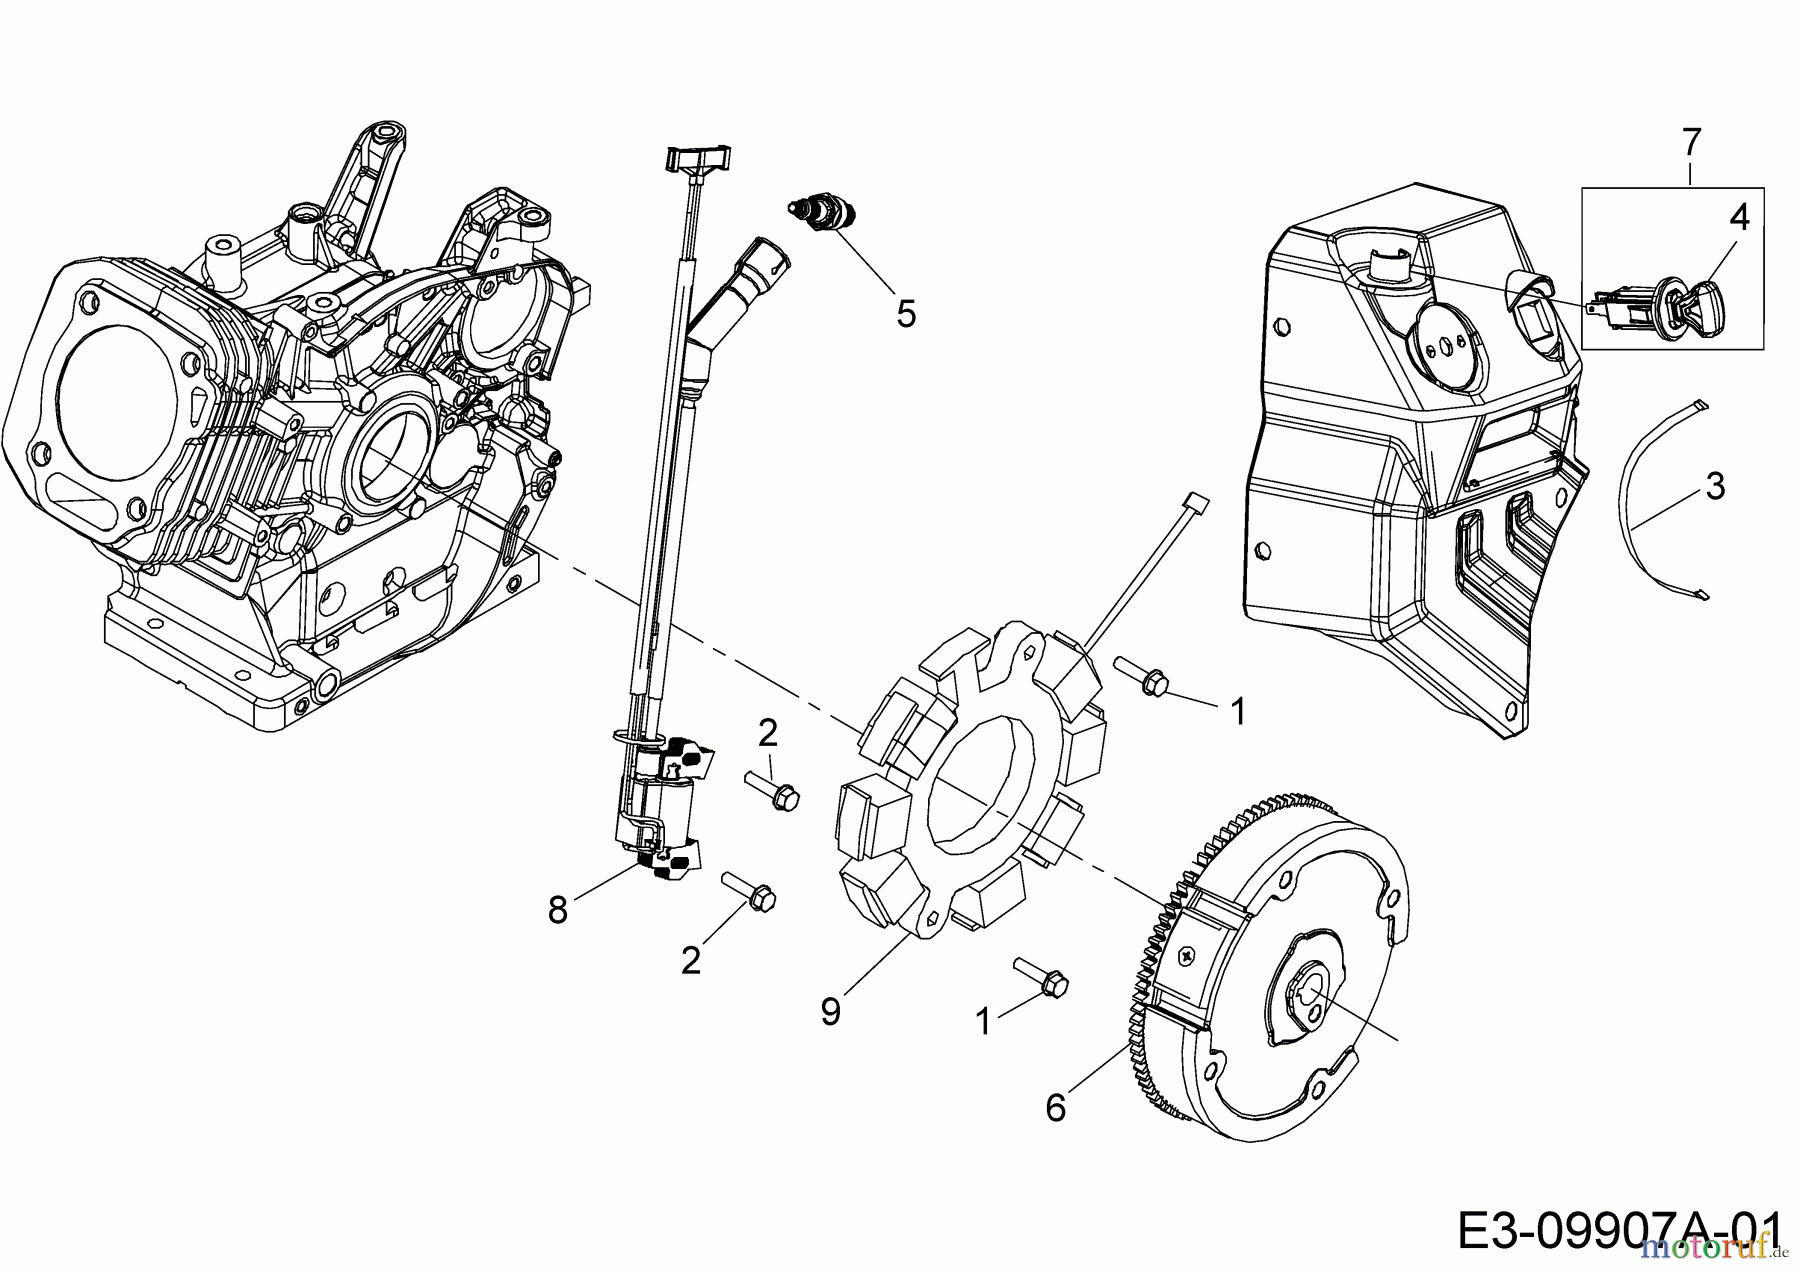  MTD-Motoren Horizontal 683-WH 752Z683-WH  (2017) Schwungrad, Zündschlüssel, Zündung